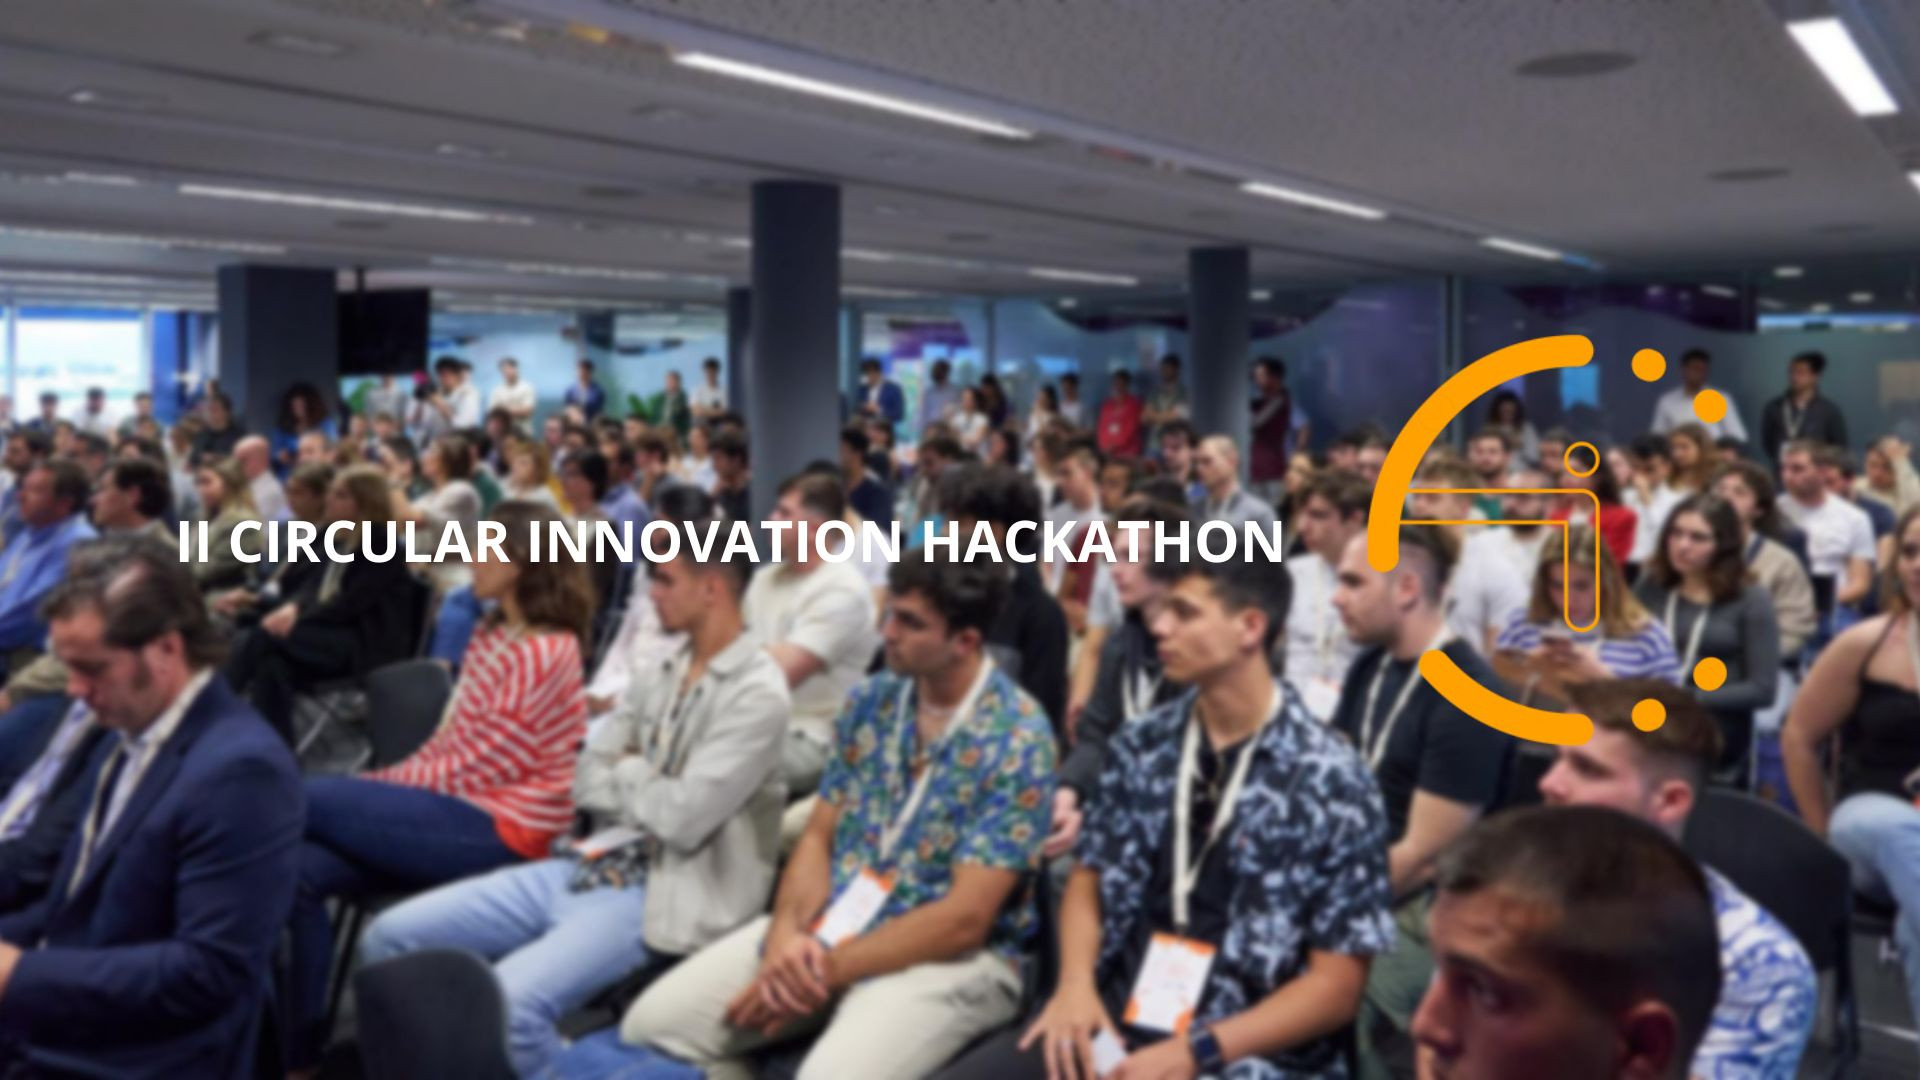 IMPULSA BALEARS lanza el II Circular Innovation Hackathon